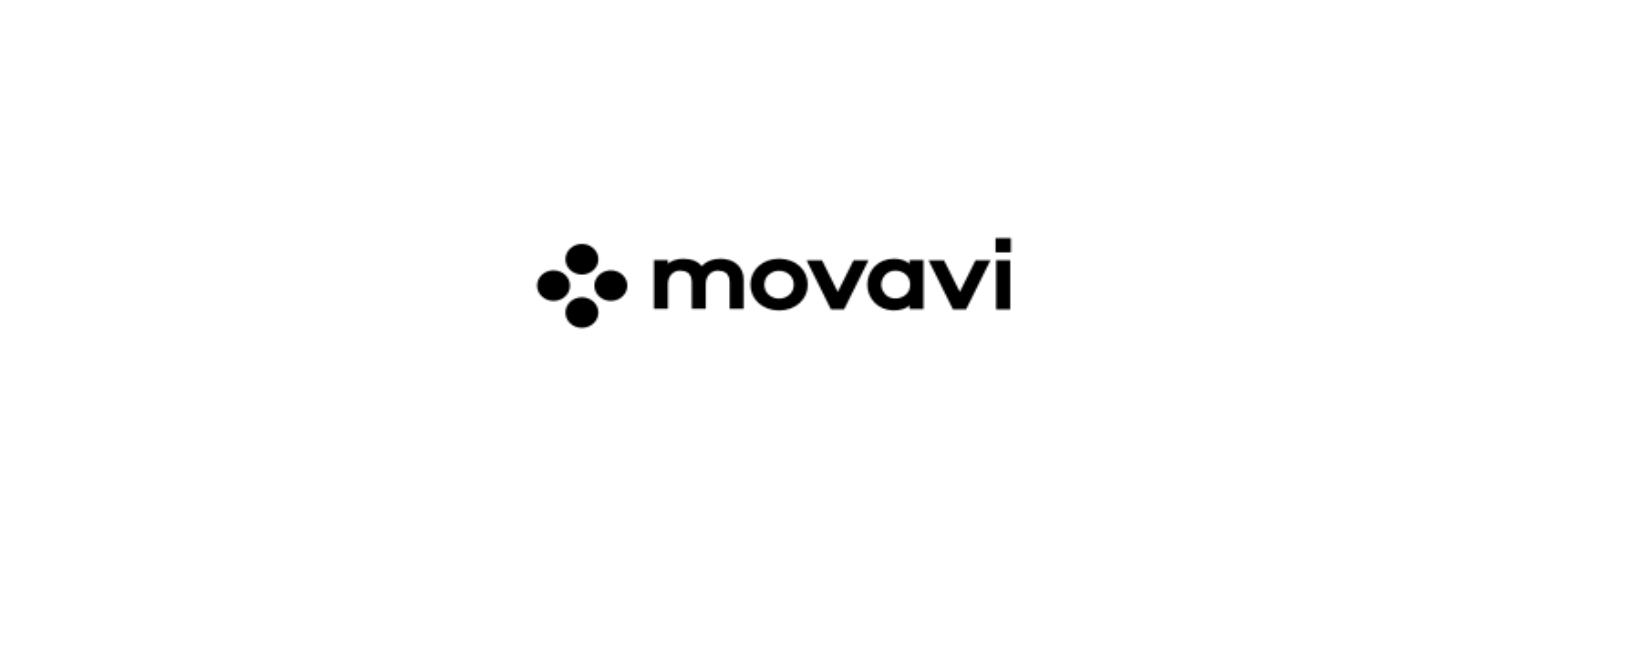 Movavi Discount Code 2023